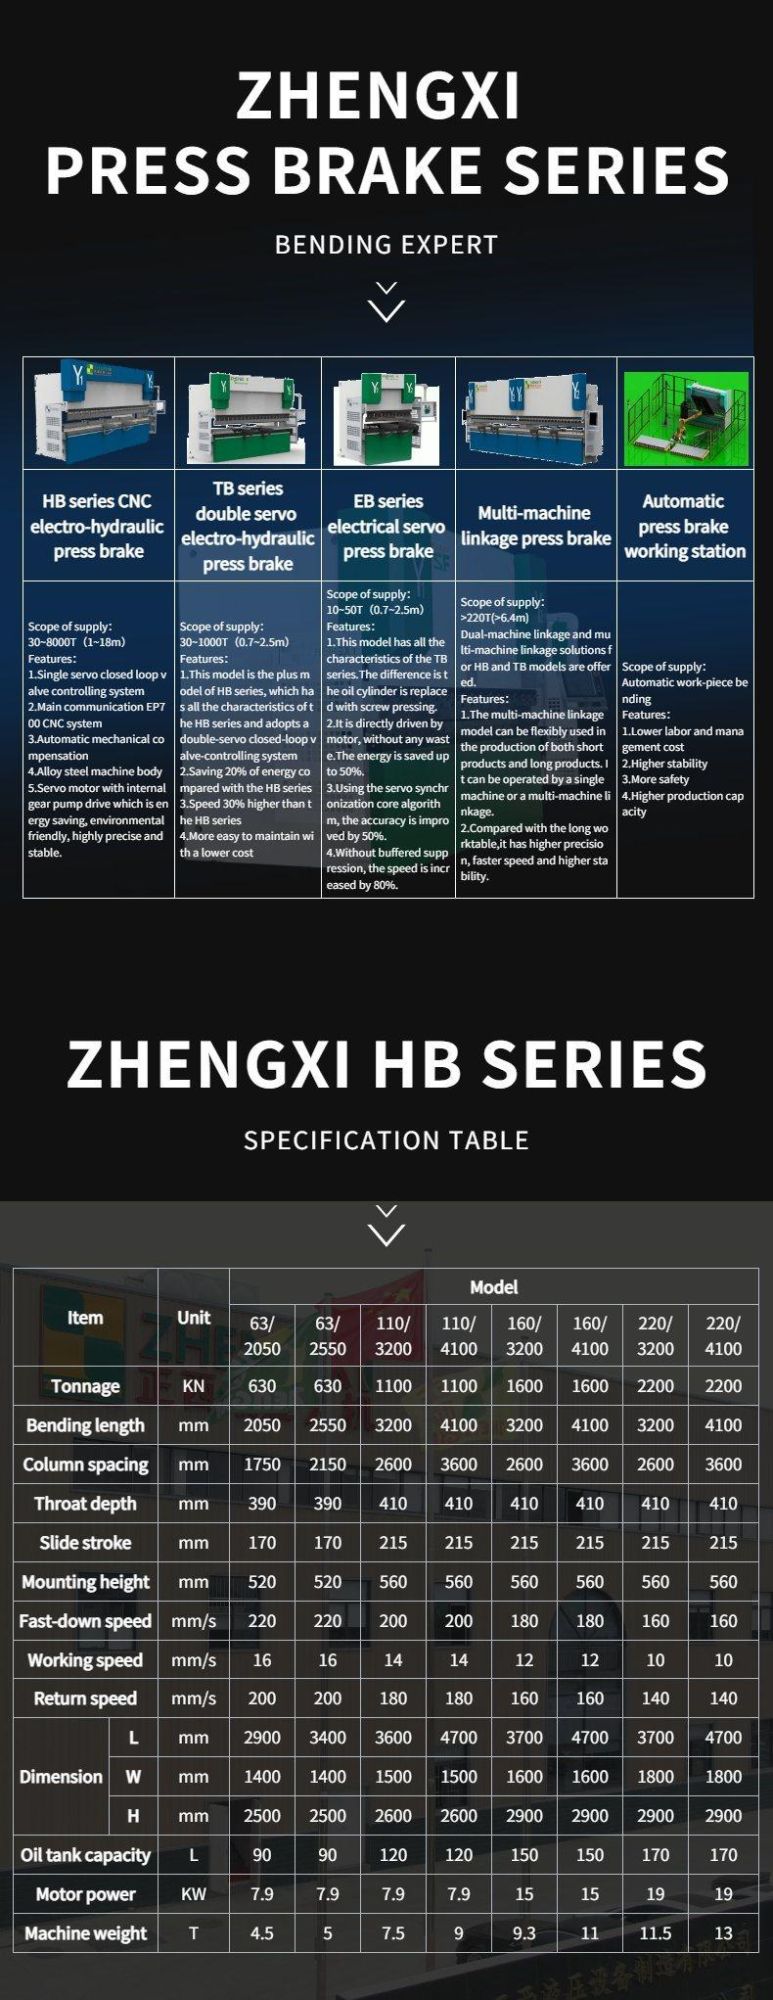 Zhengxi Automatic Hydraulic Bending Machine with CE Certification